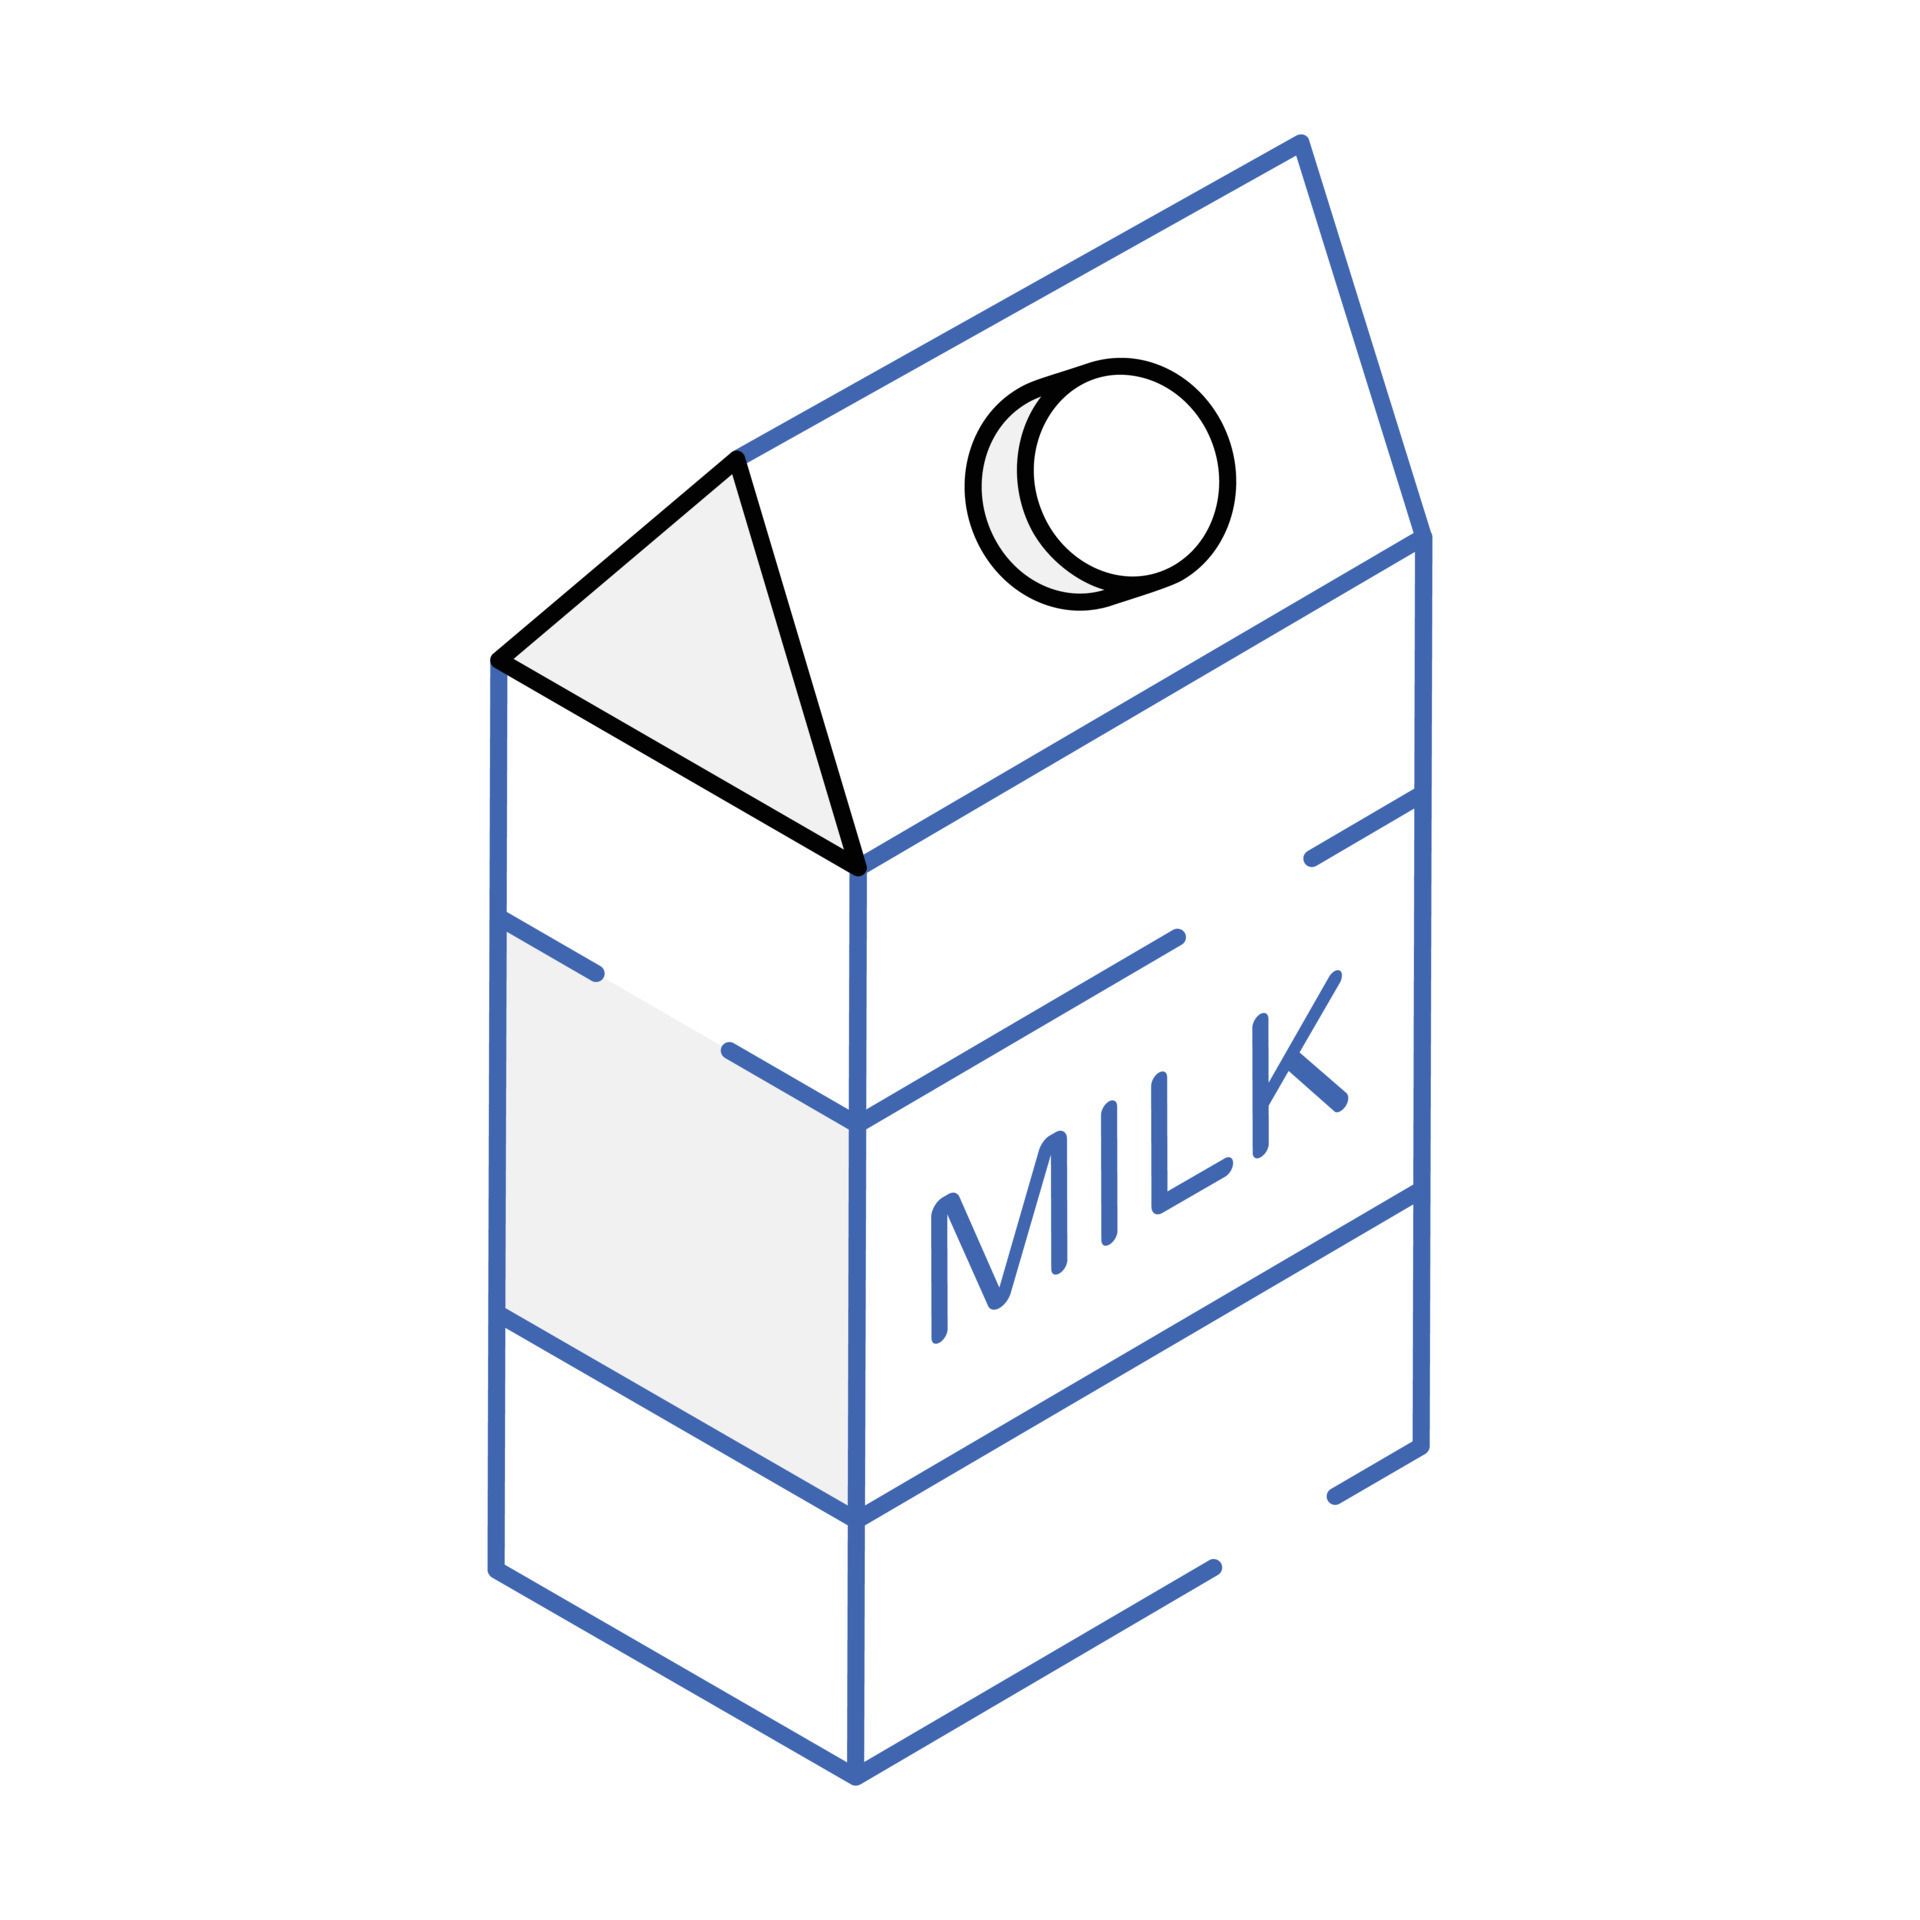 Customizable isometric icon of milk packet